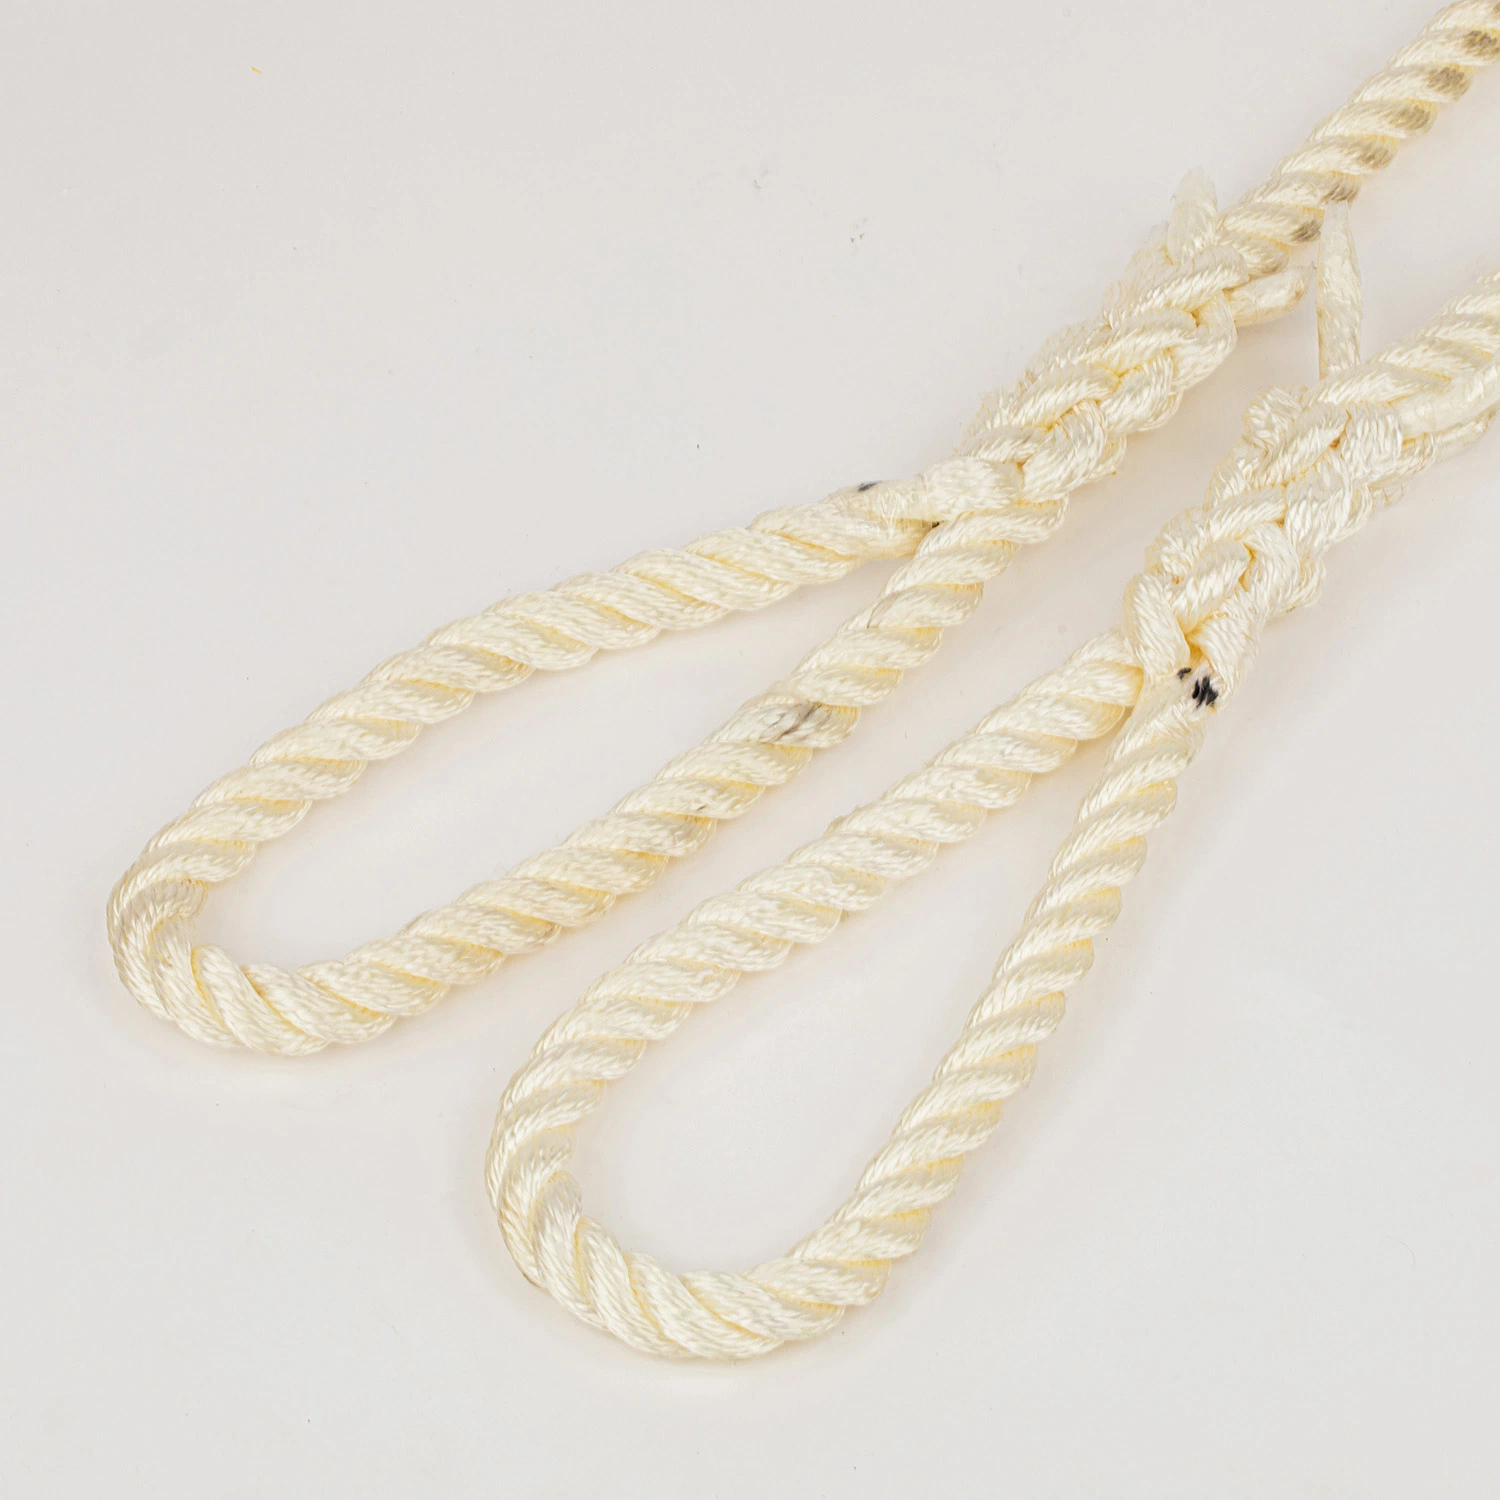 Good Quality Nylon Double Braided Mooring Rope